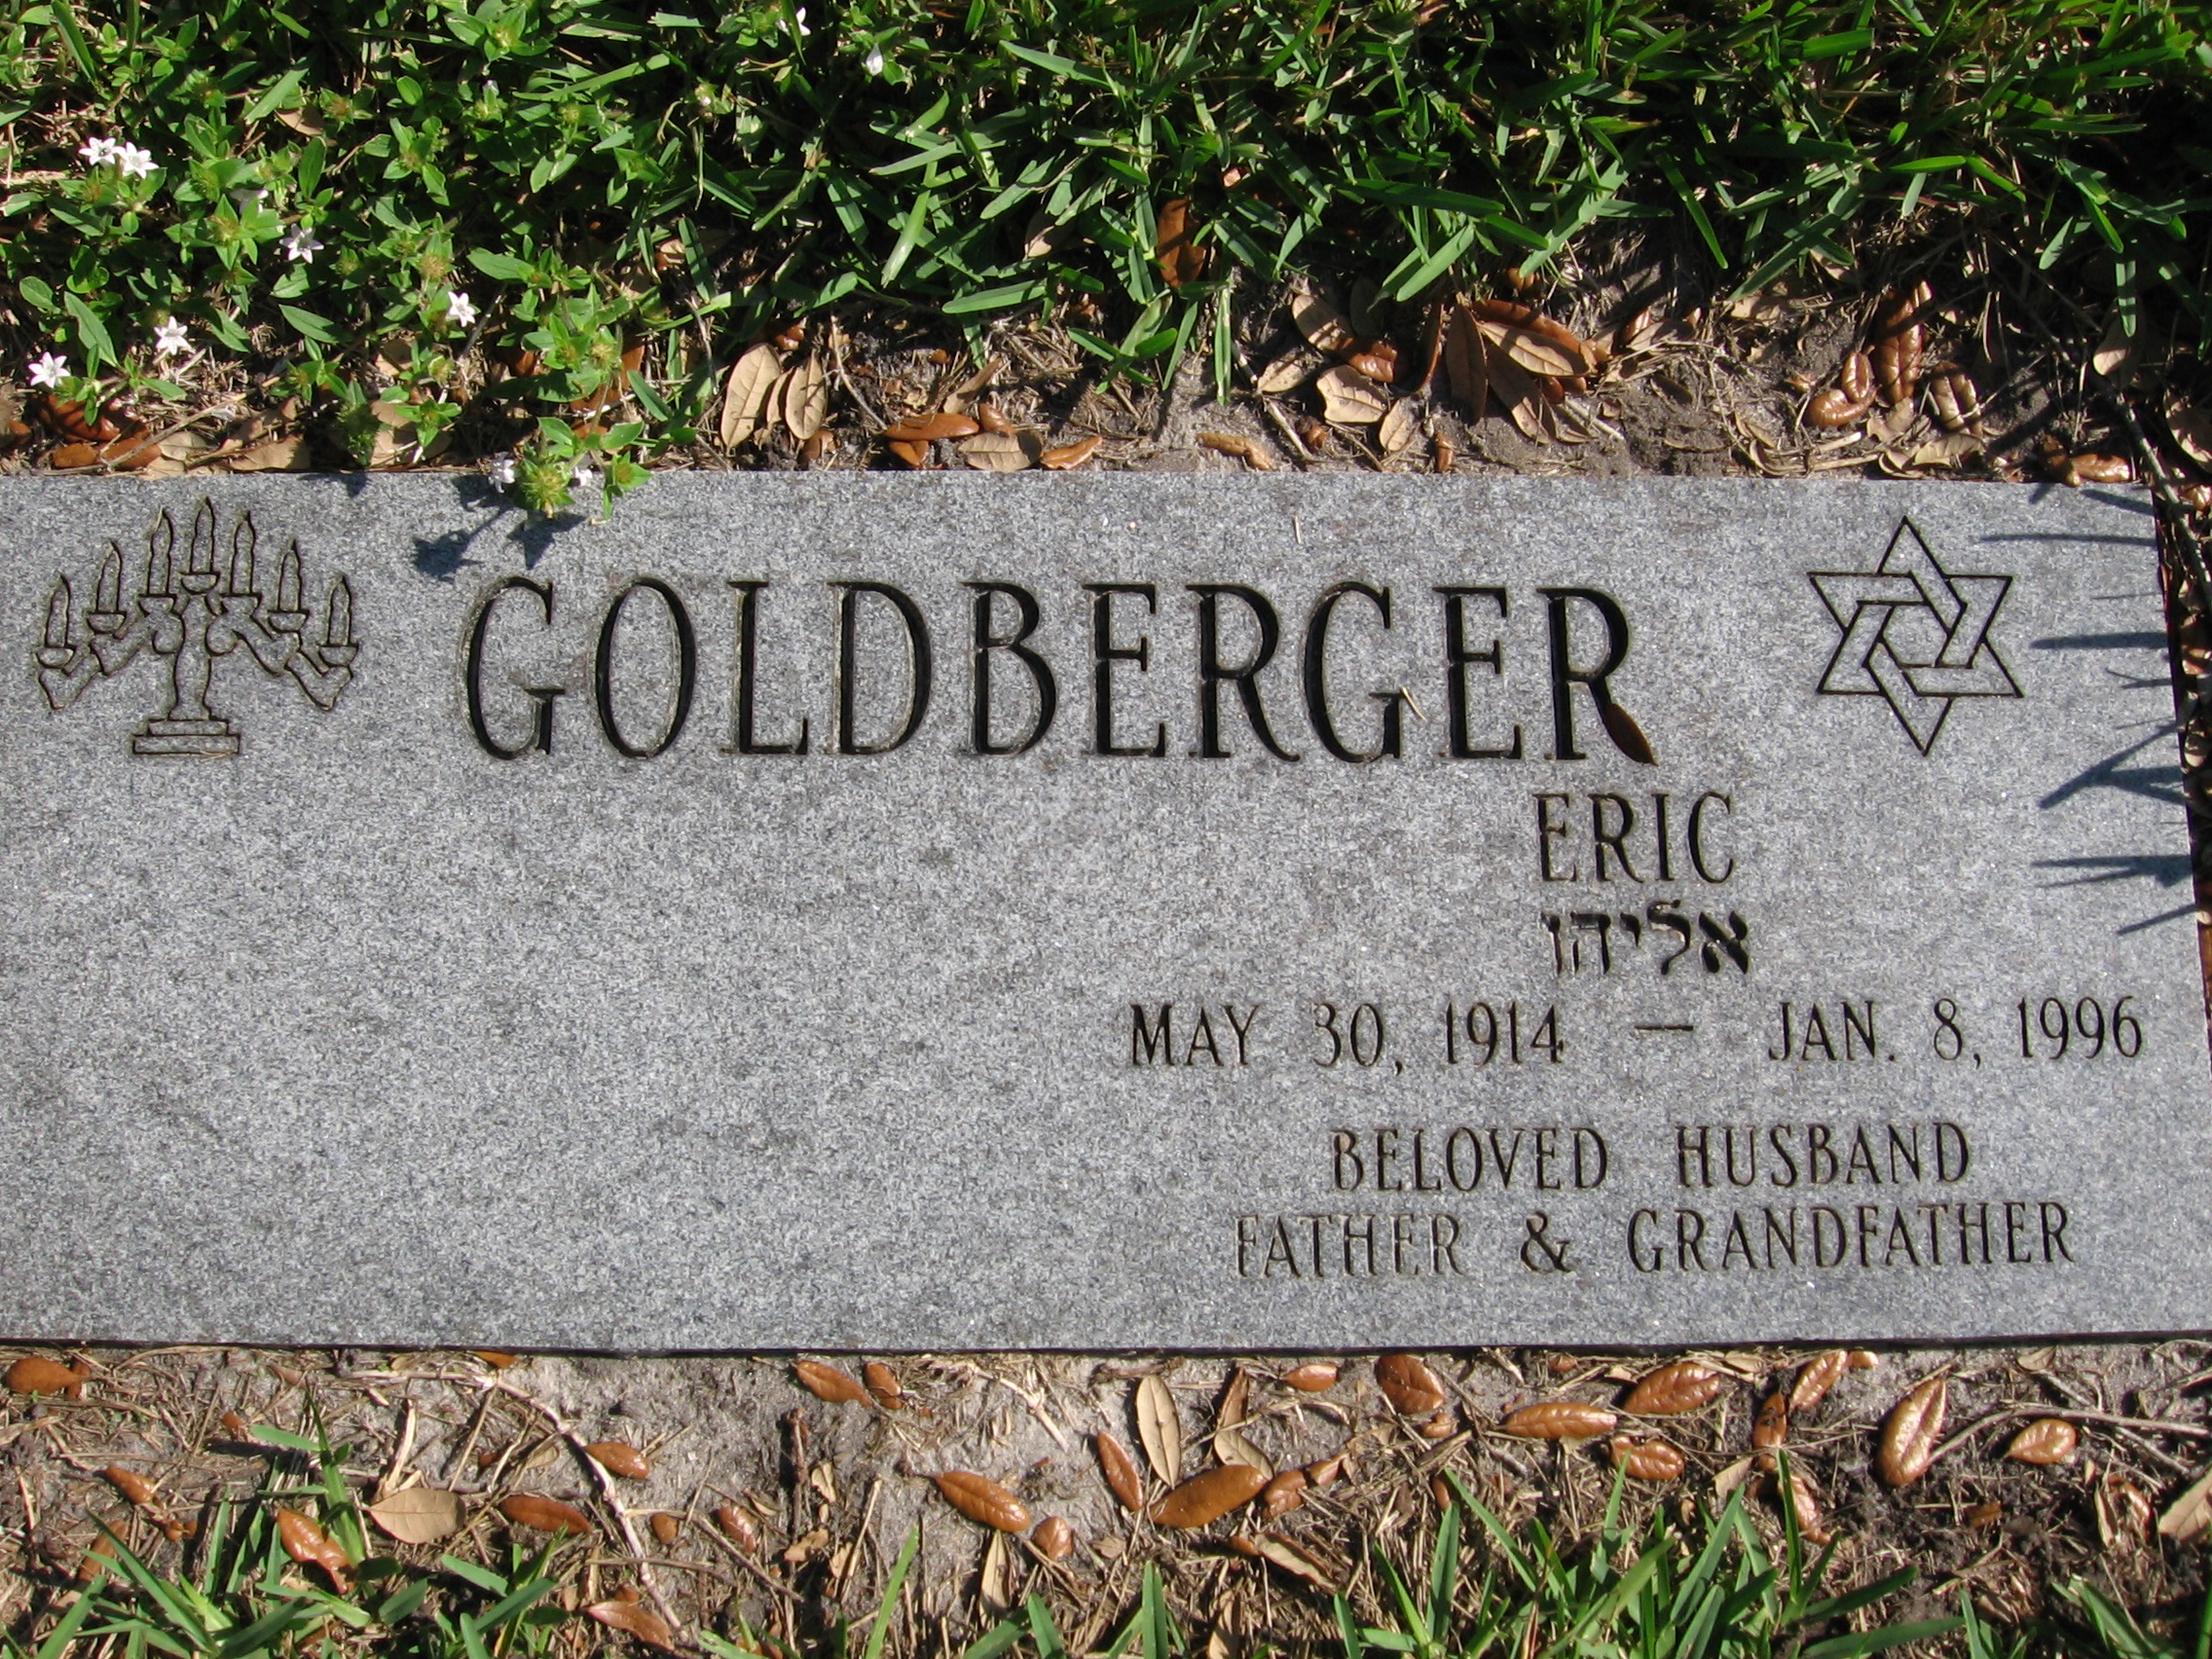 Eric Goldberger